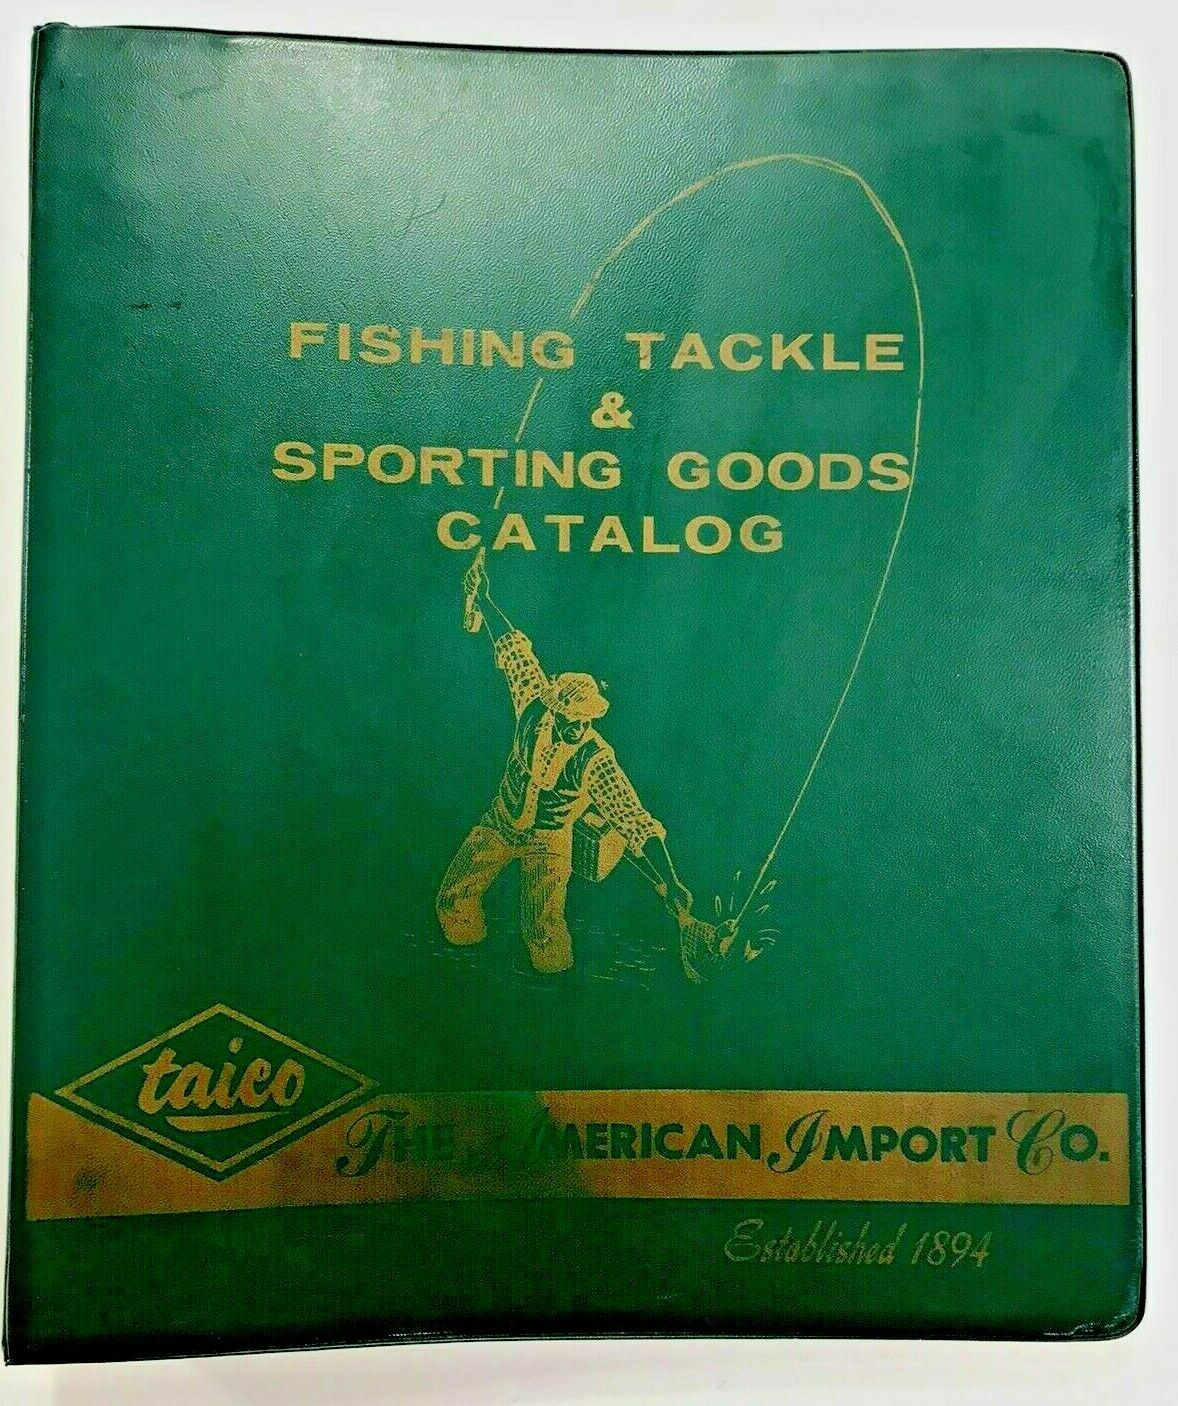 Rare 1962 Vtg Advertising Catalog Fishing Tackle Sporting Good Taico Binder Full